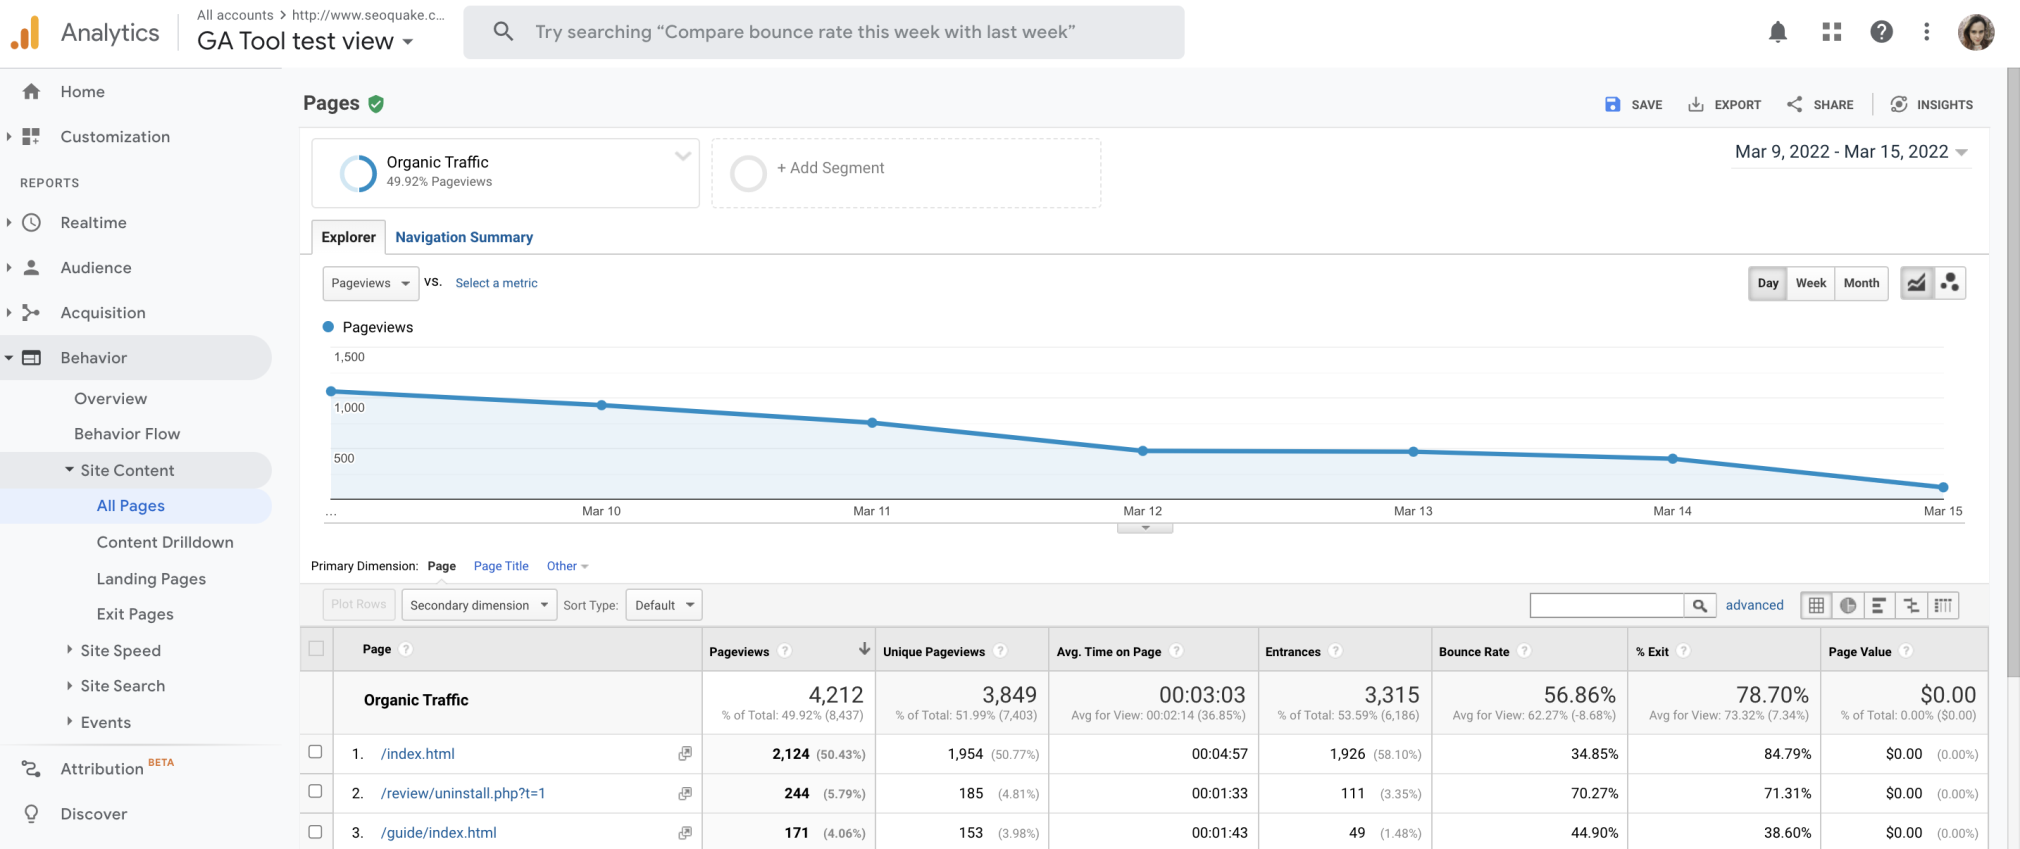 Google Analytics Site Content view